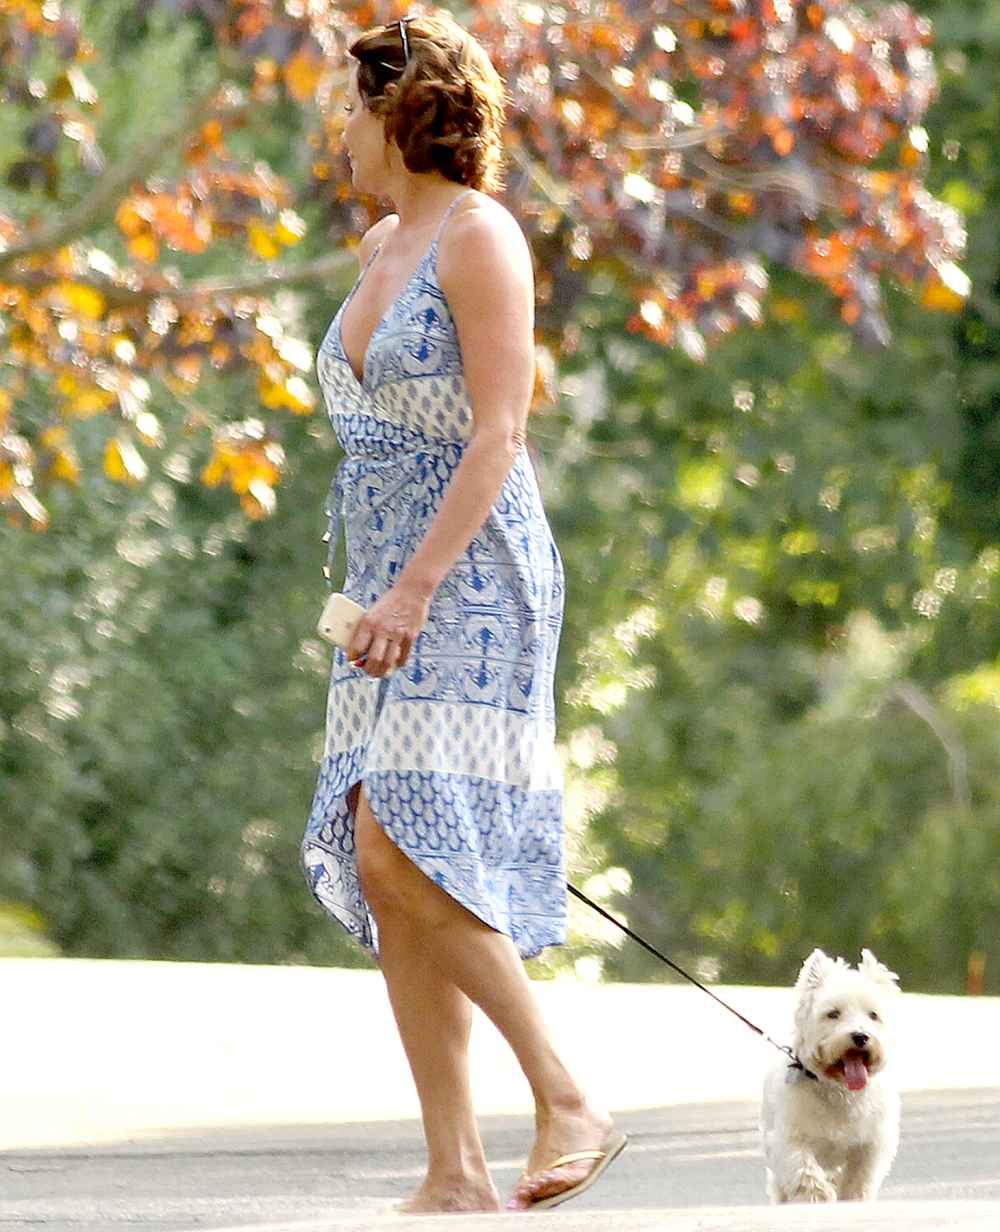 Countess Luann De Lesseps walking her dog with a friend in the Hamptons on August 23, 2017. MATT AGUDO/INSTARimages.com